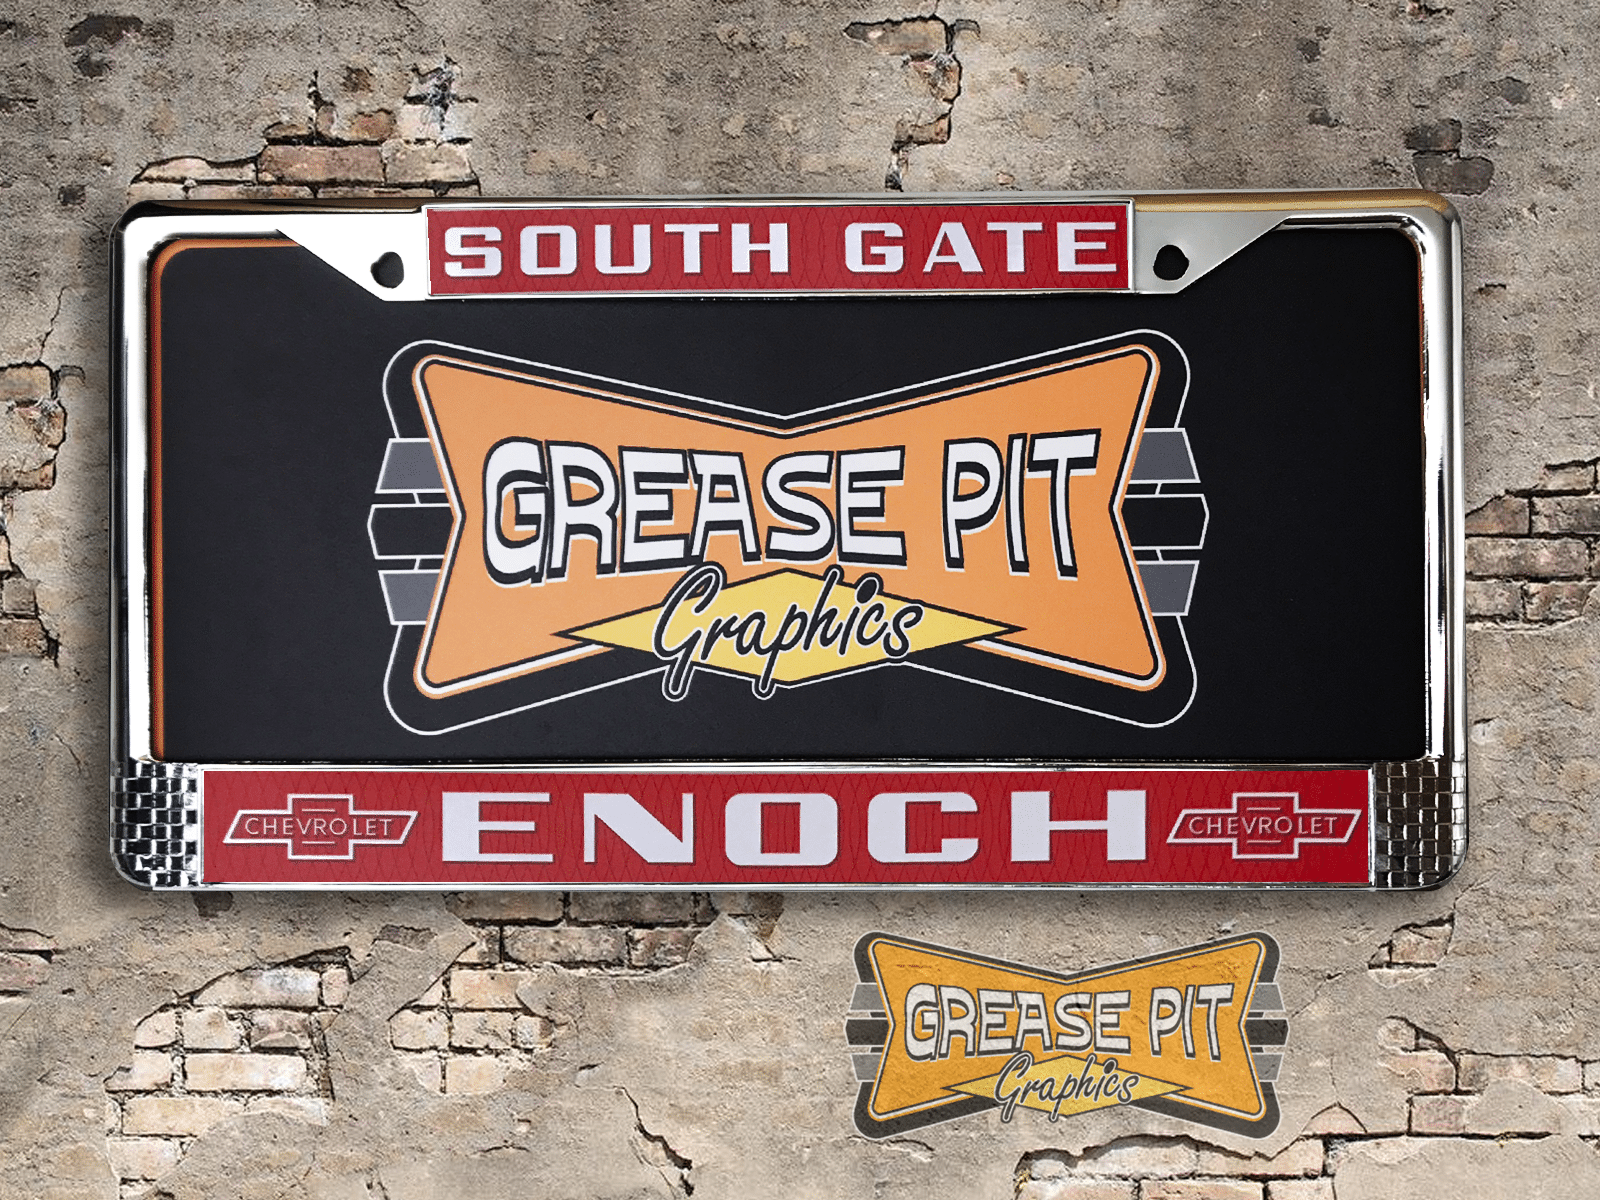 Enoch Chevrolet South Gate License Plate Frame Tribute